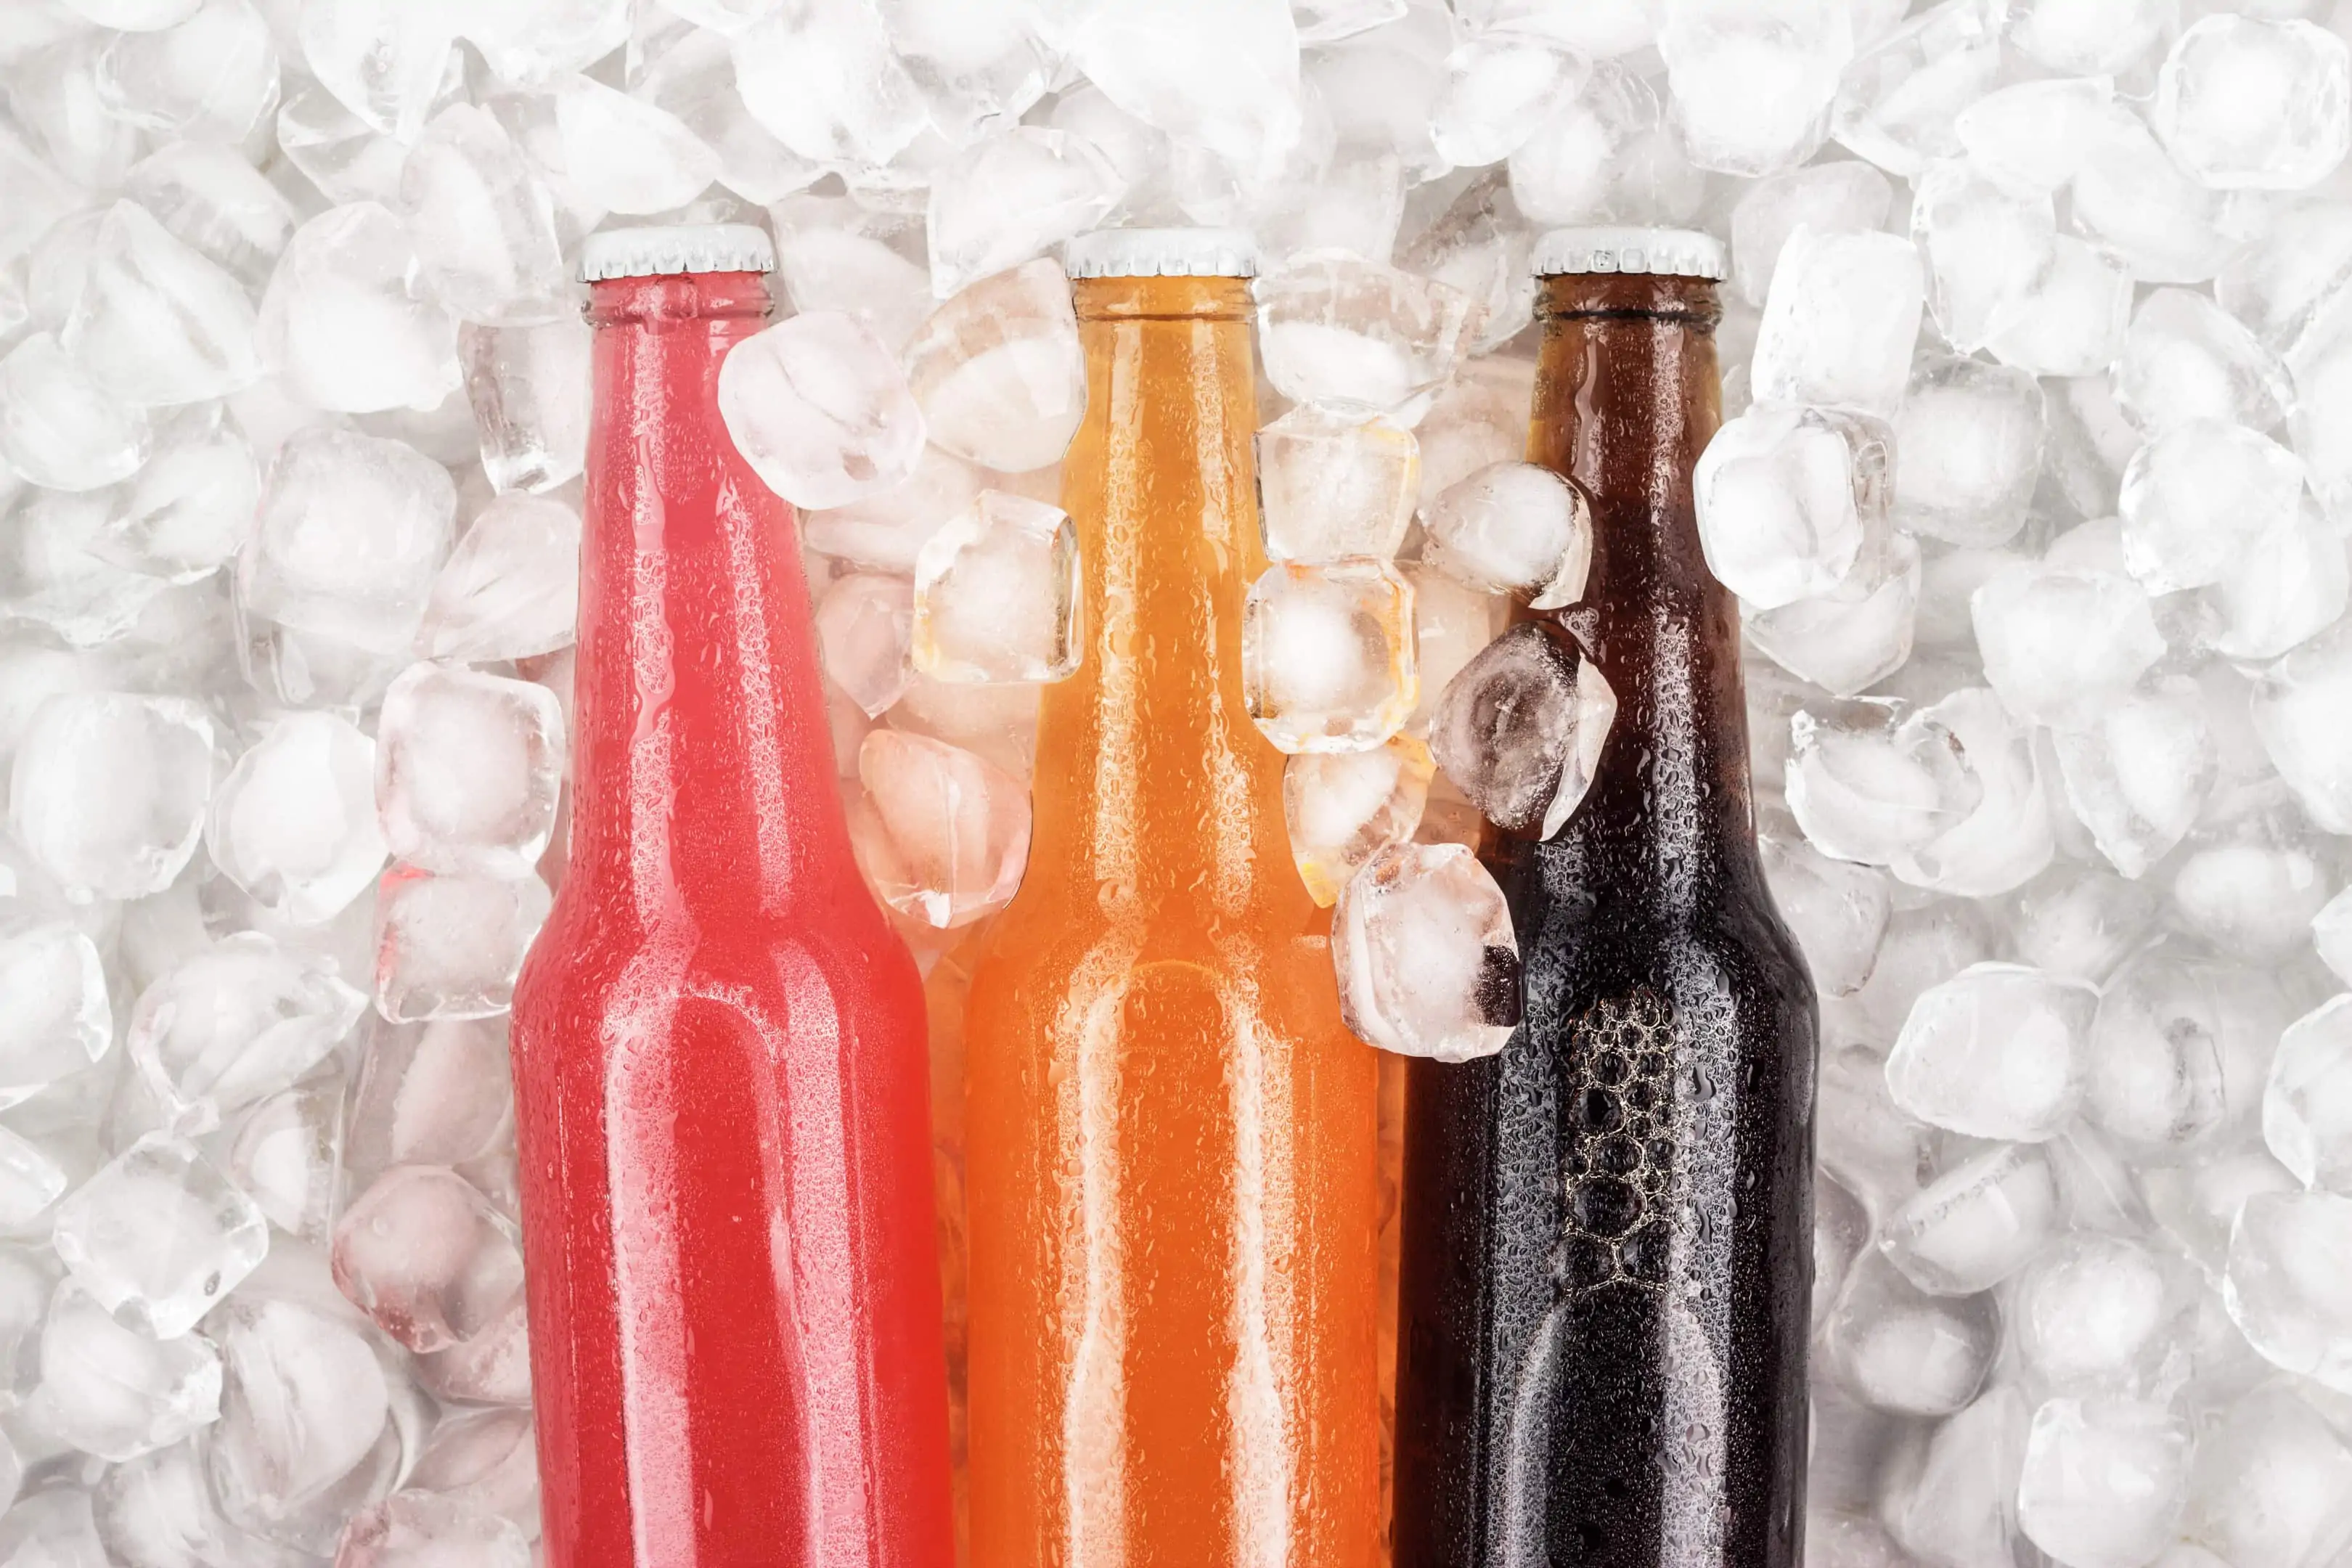 Sugar drinks in glass bottles over ice